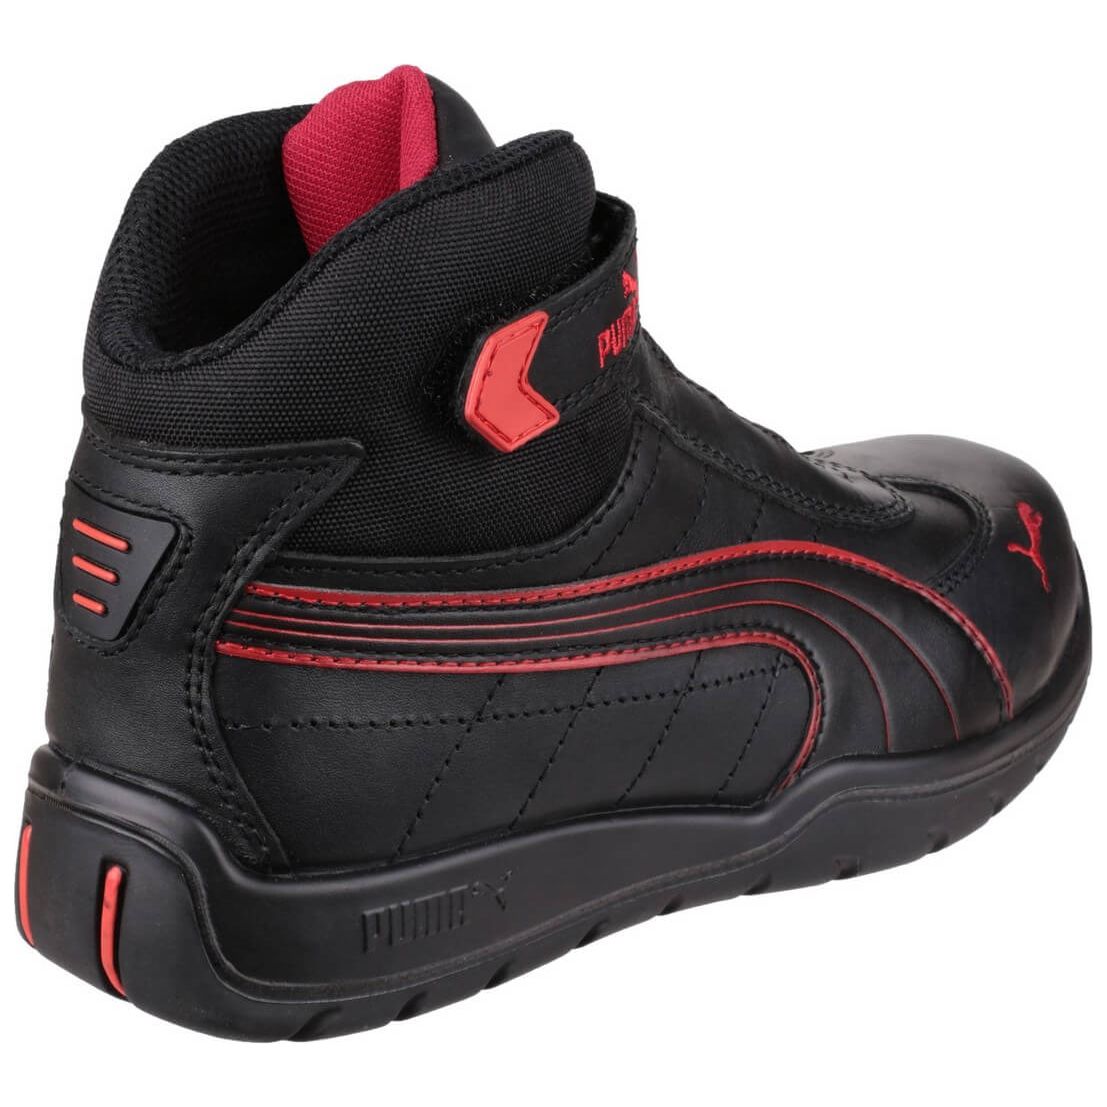 Puma Daytona Safety Boots-Black-2